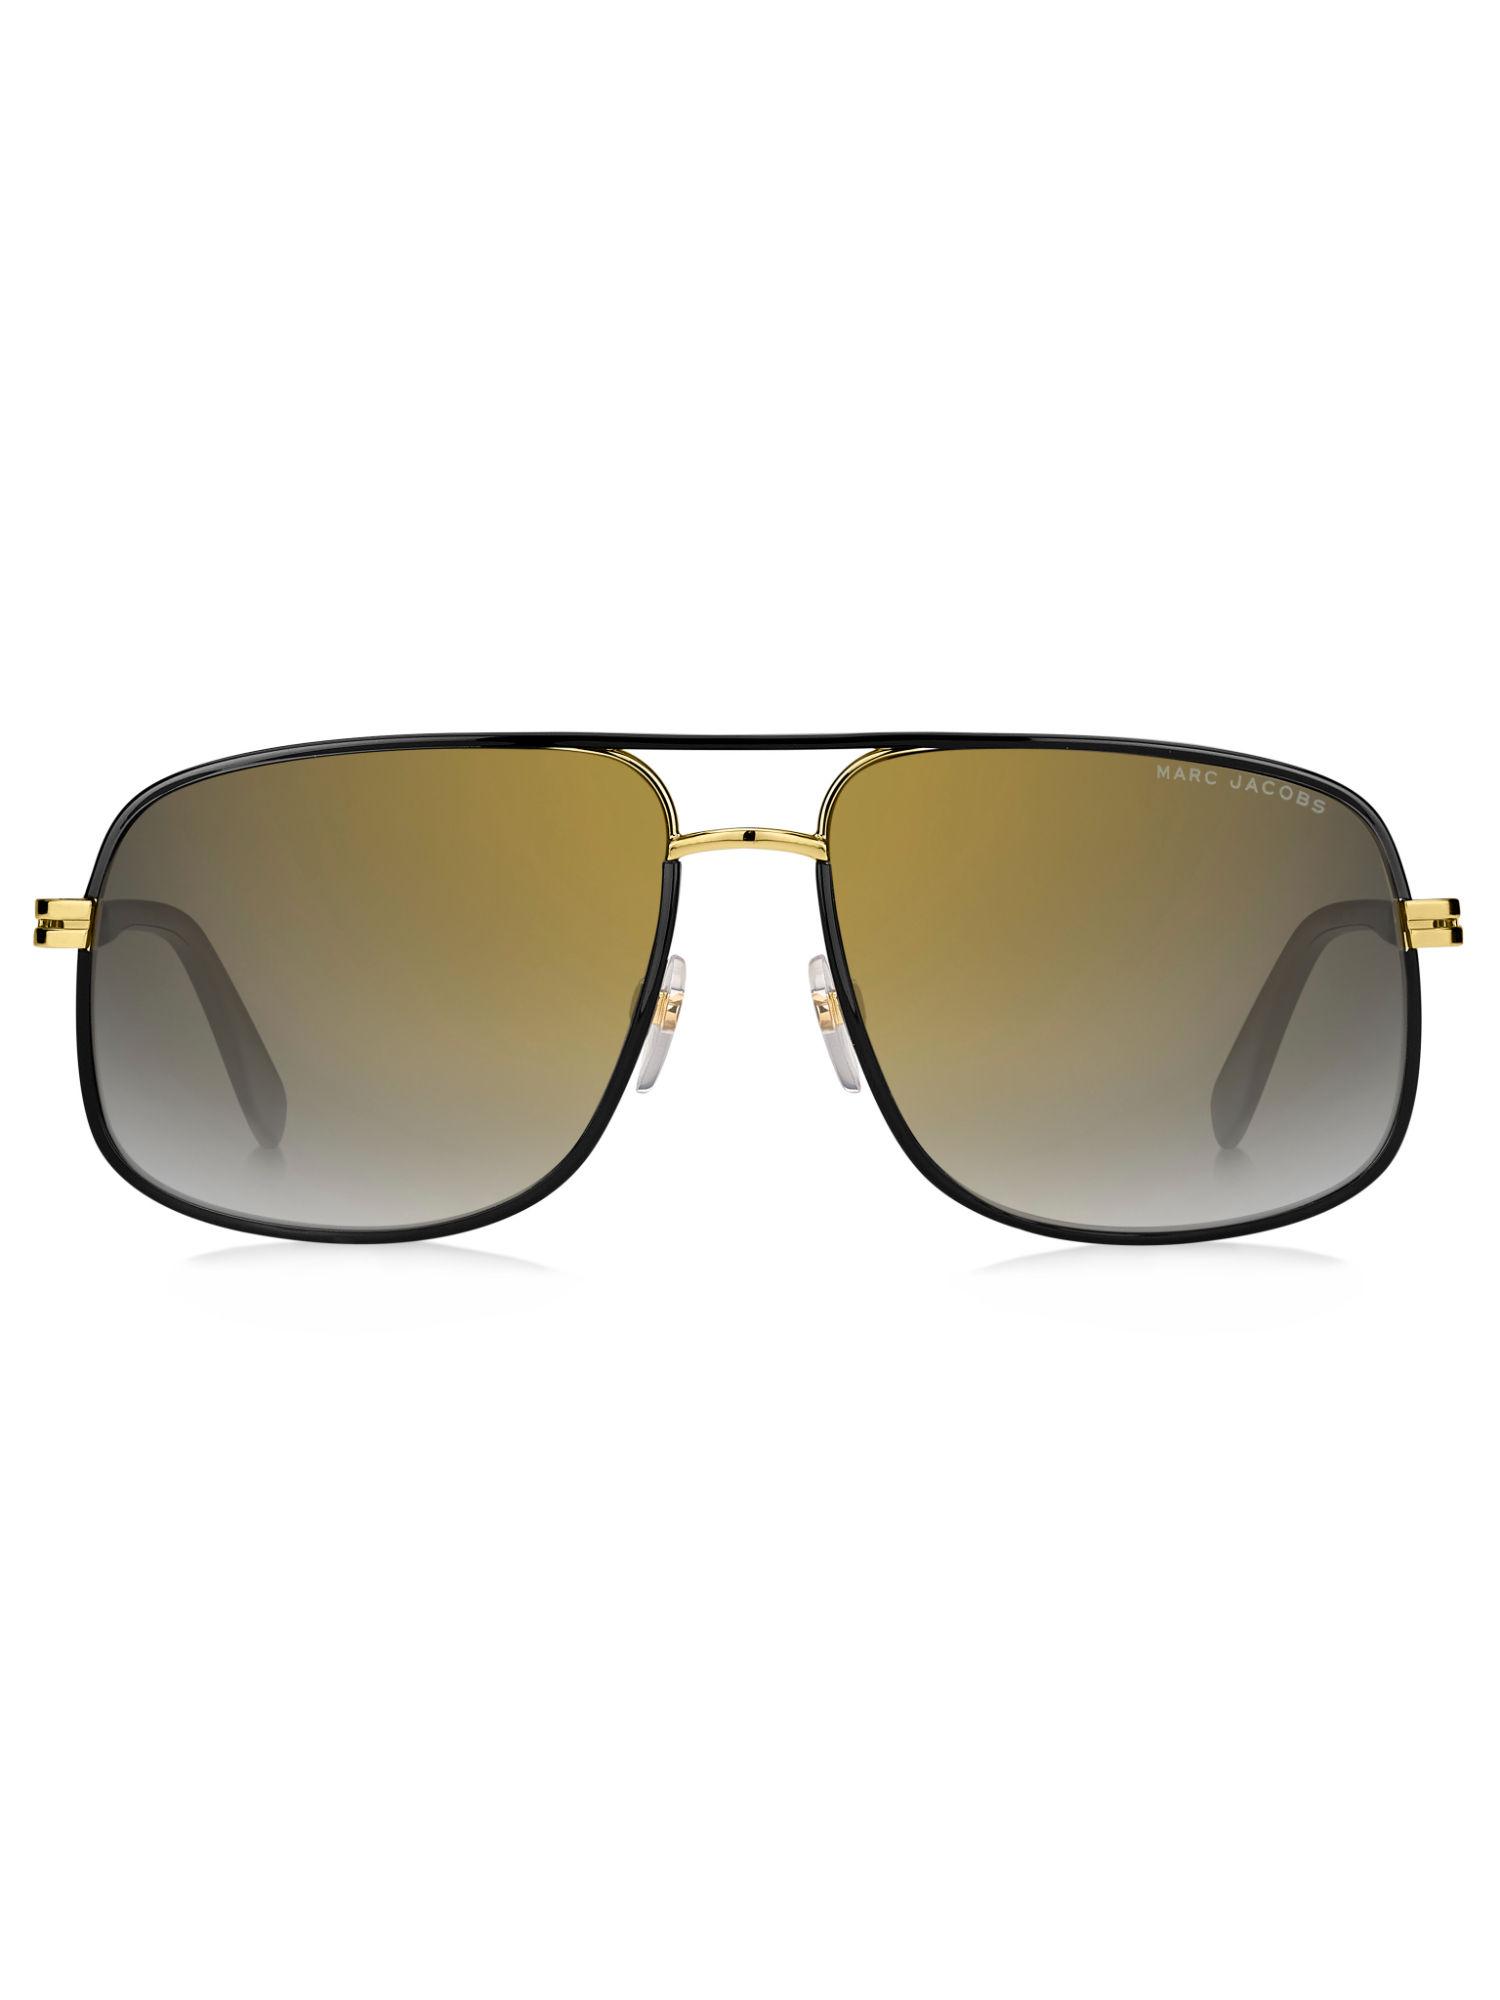 202872rhl60fq men square shape grey lens sunglasses